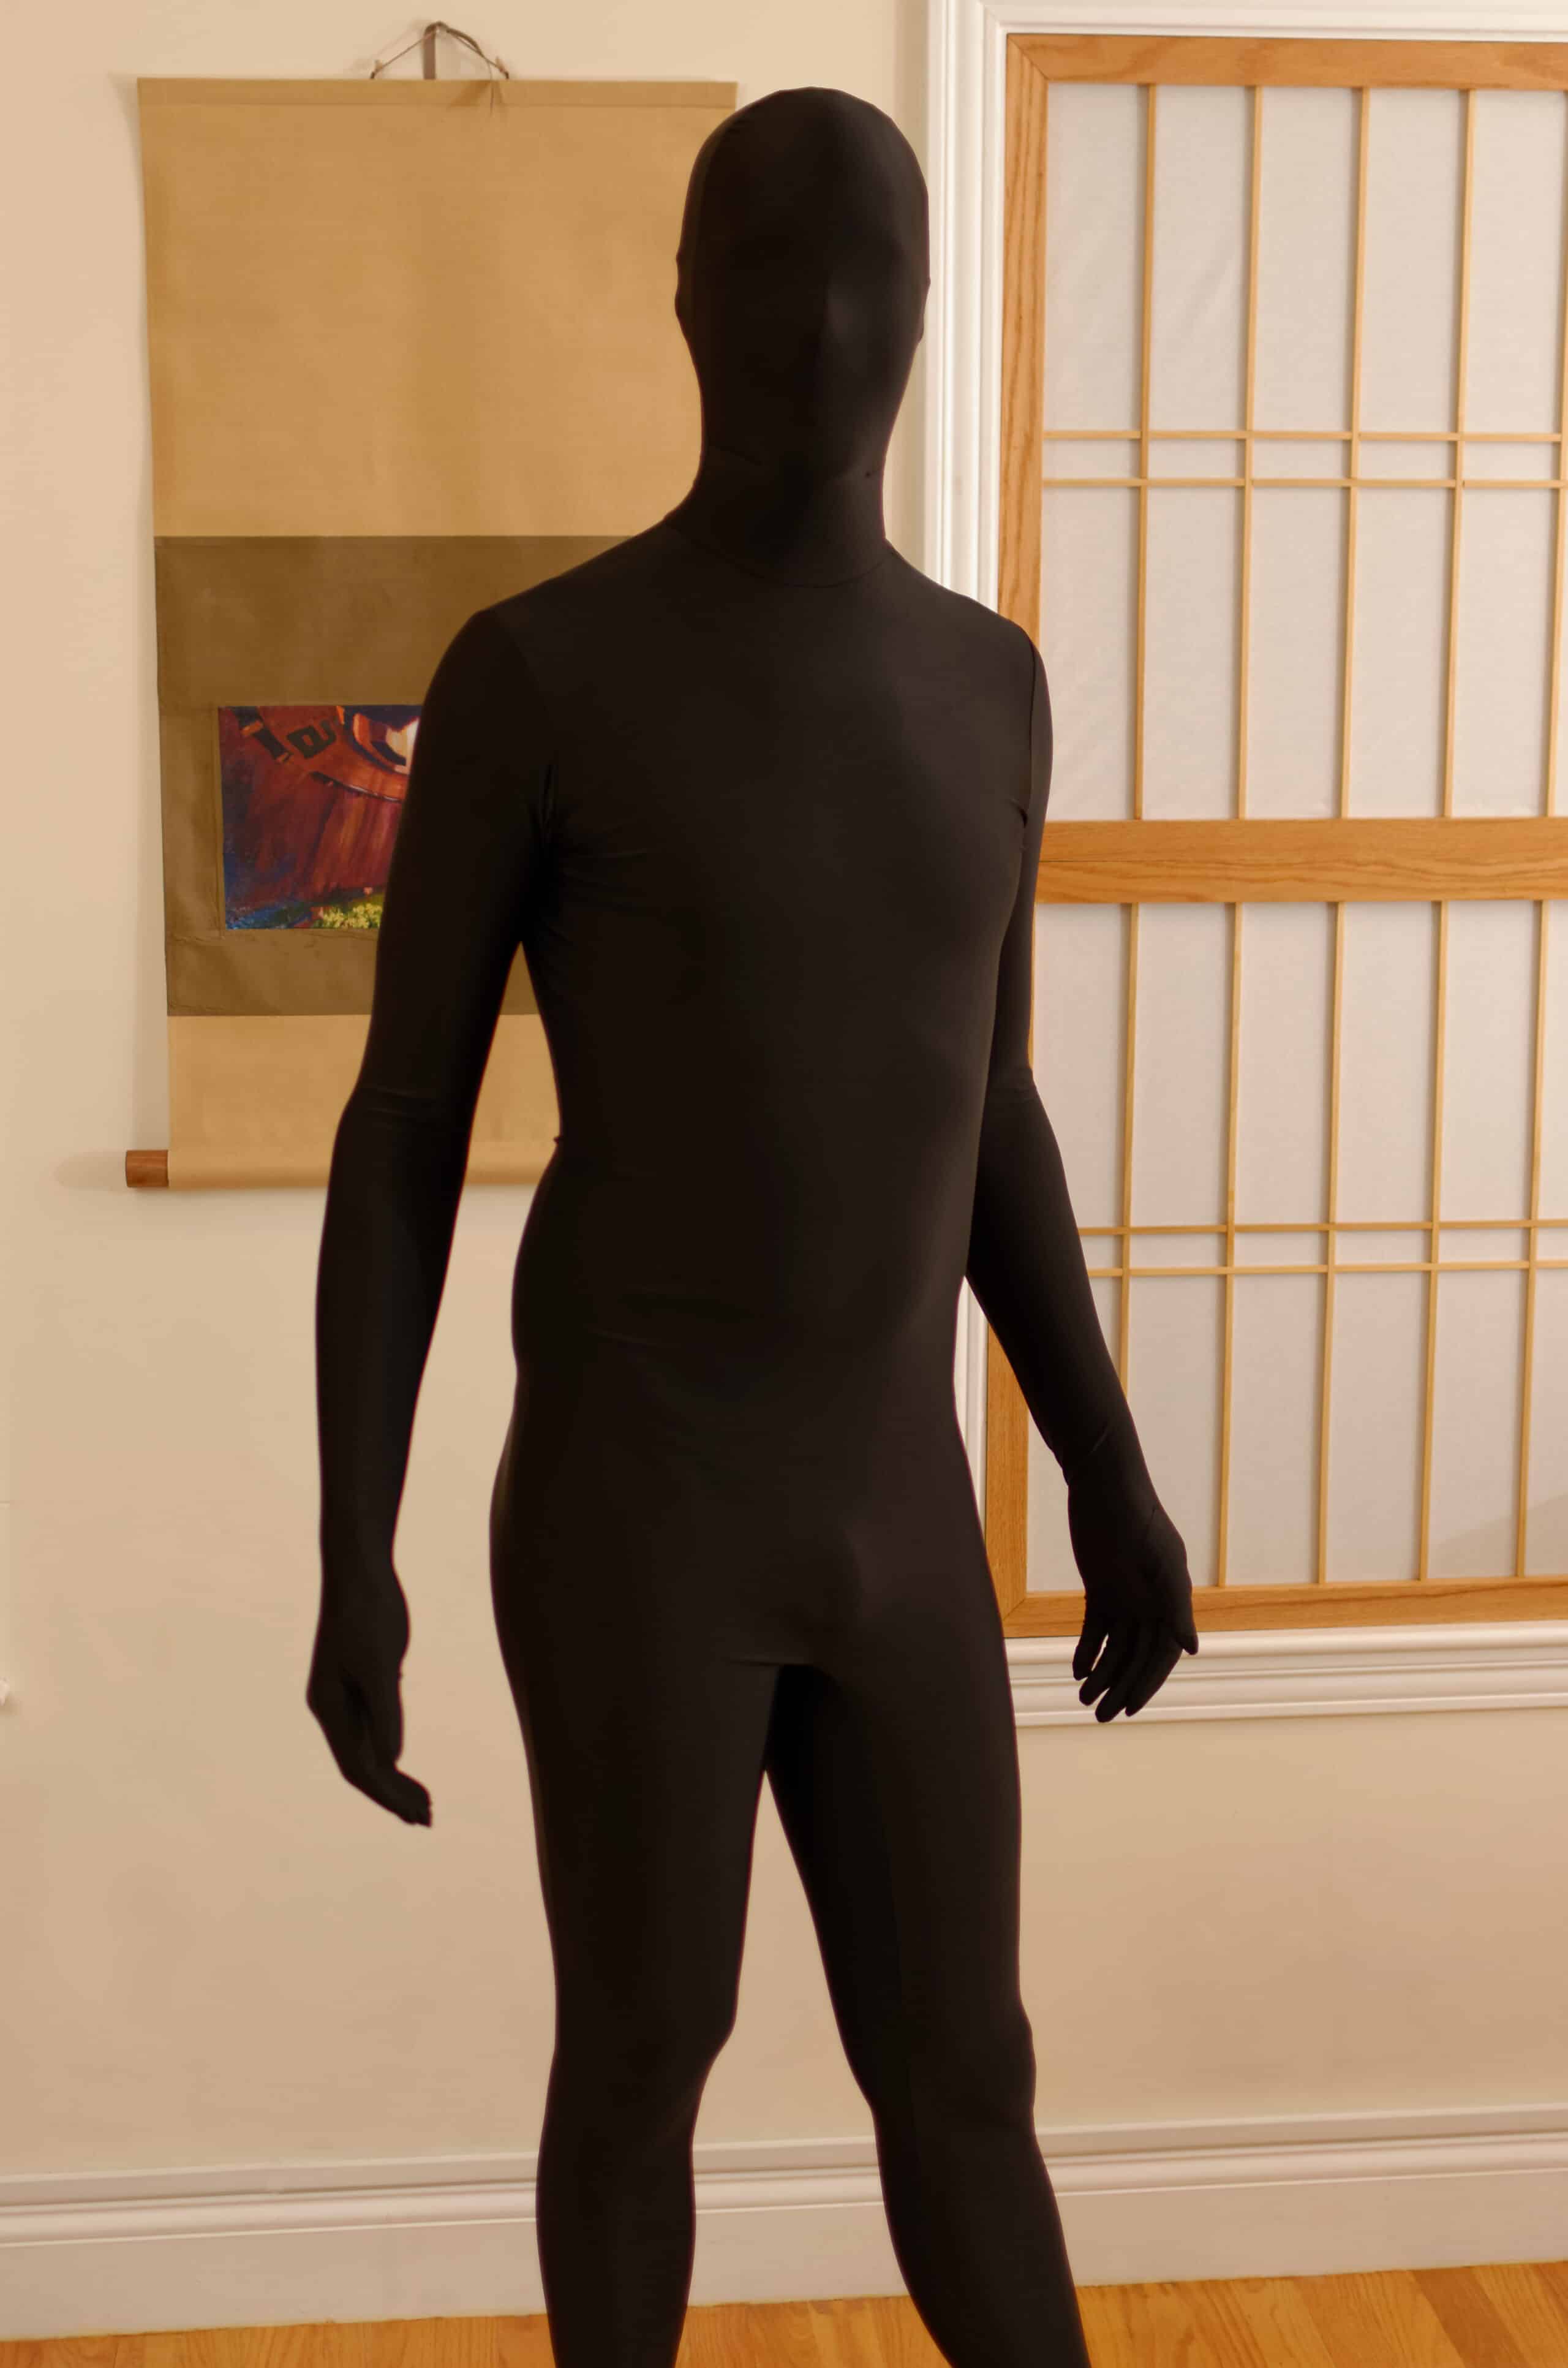  Eigso Zentai Body Suit for Women Men Spandex Full Body